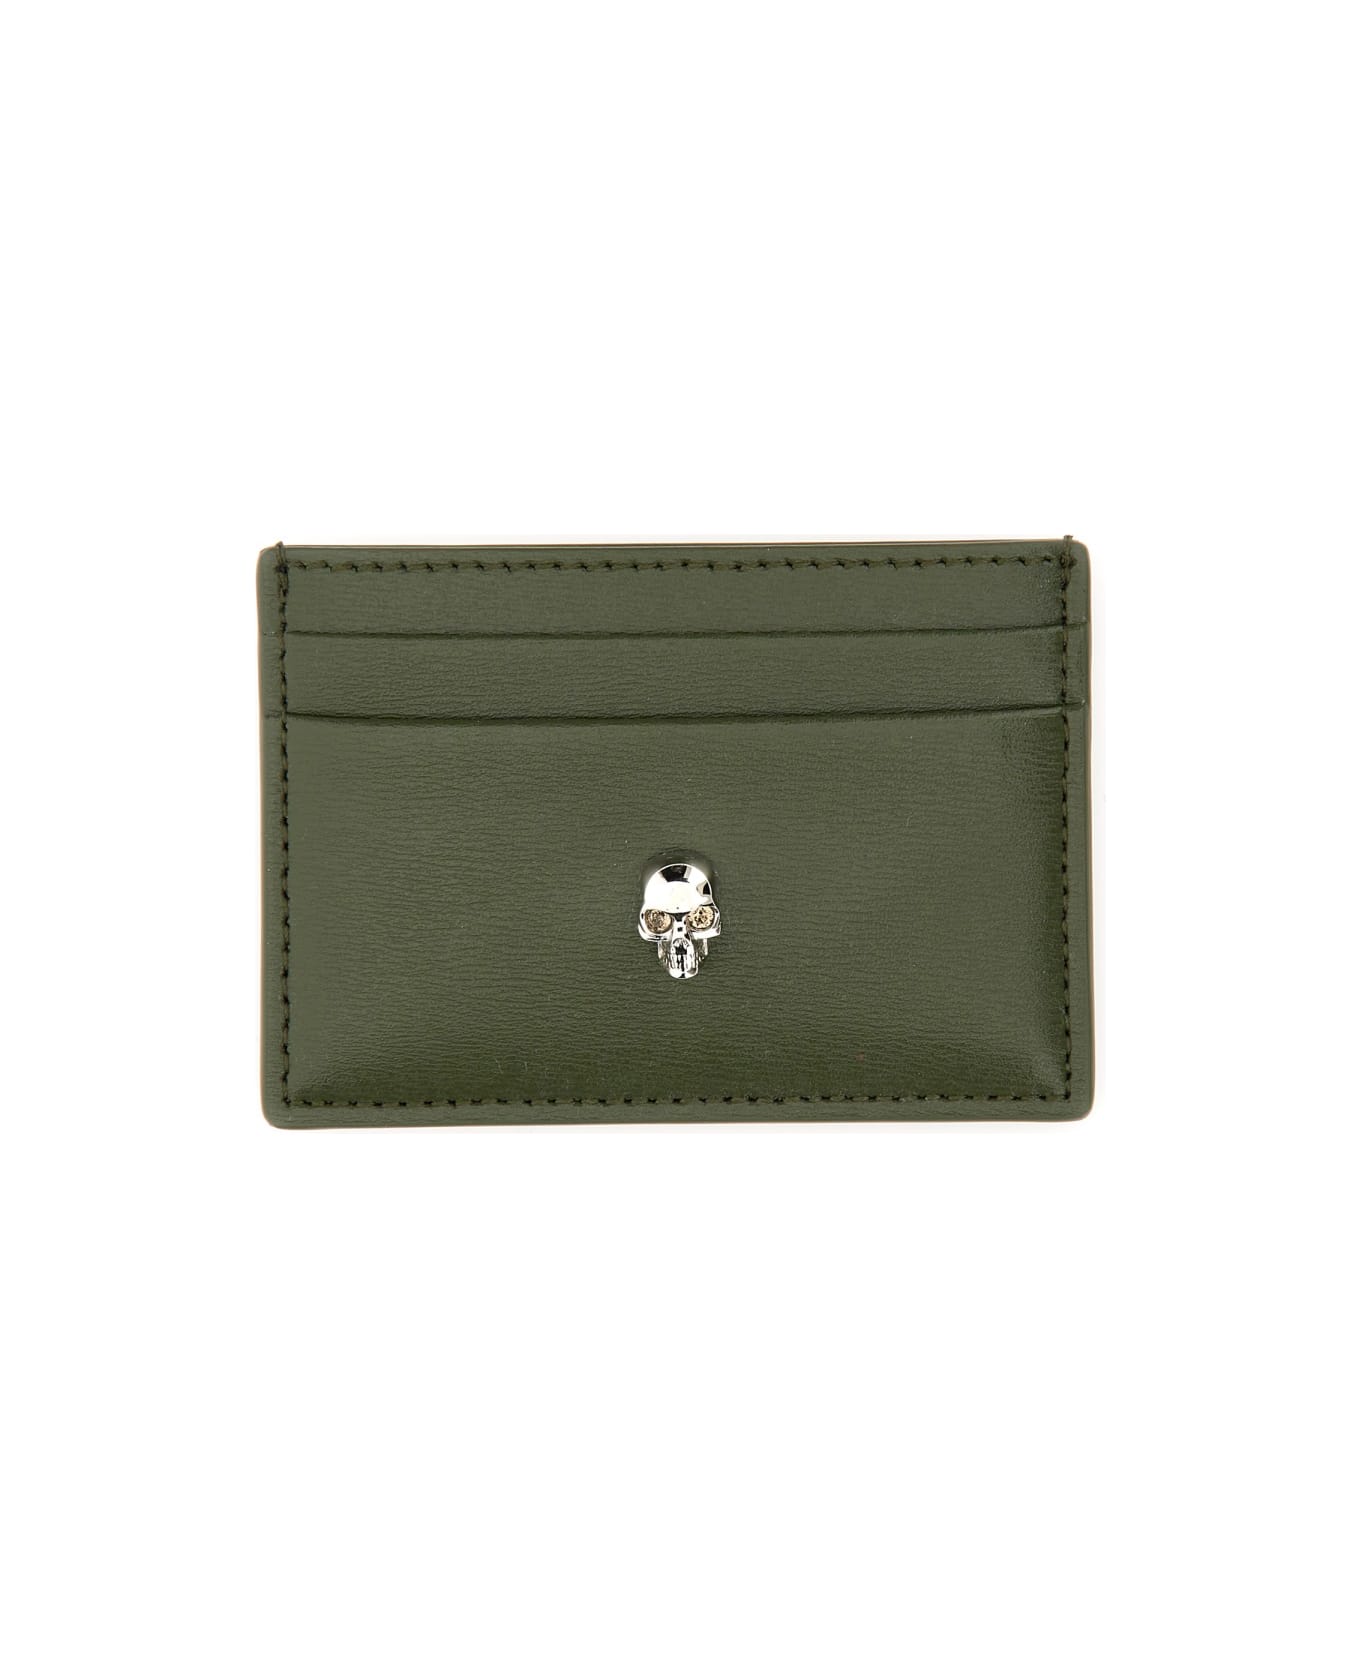 Alexander McQueen Leather Card Holder - GREEN 財布